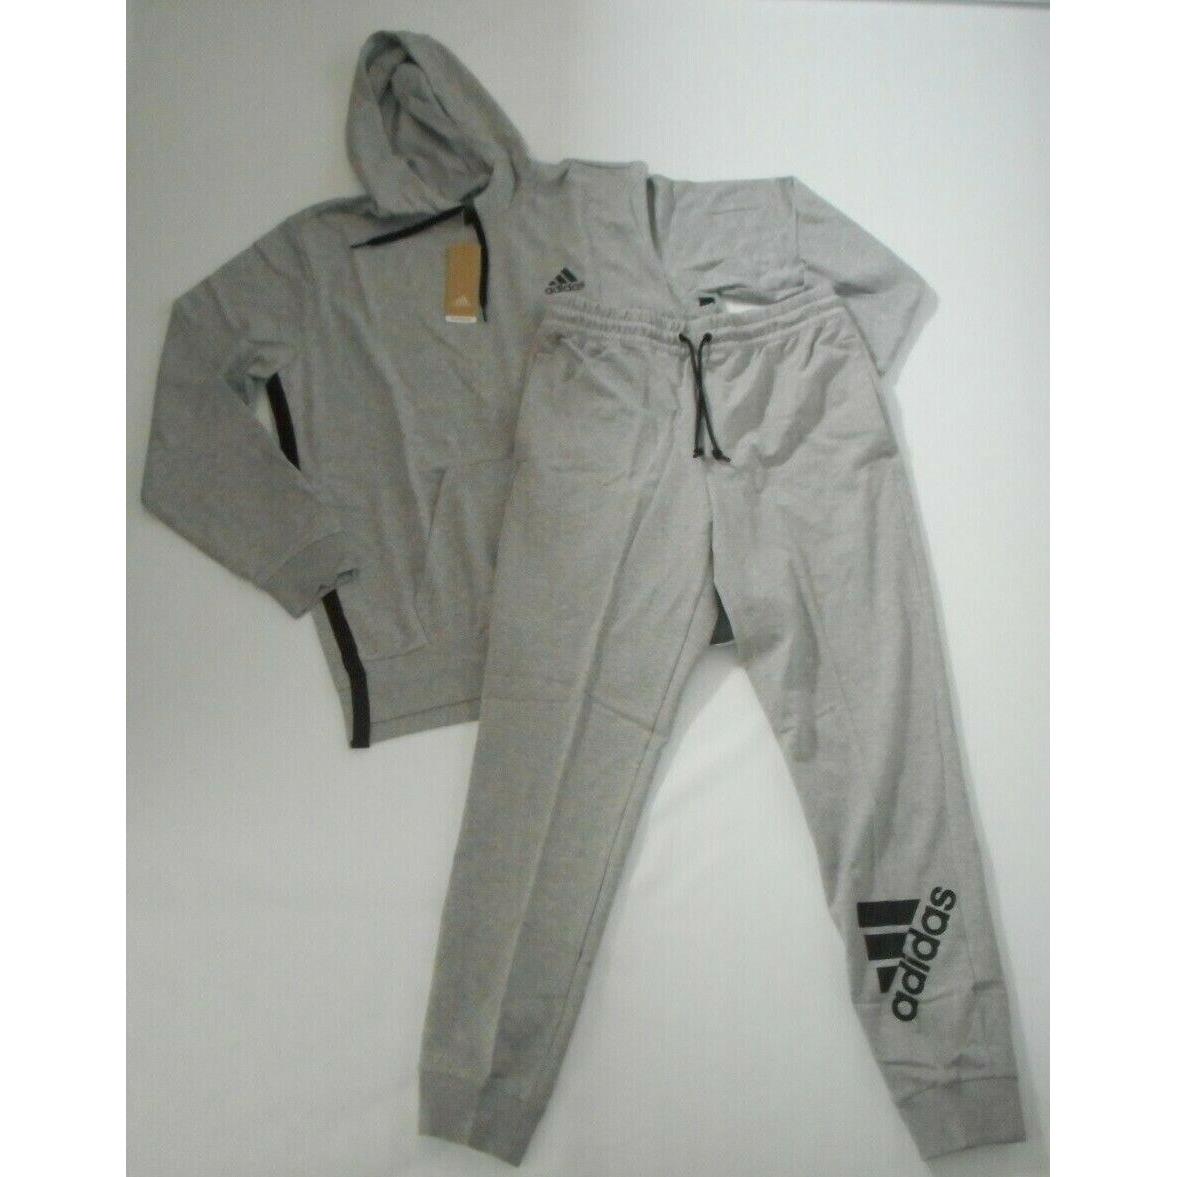 Adidas clothing  - Gray 2